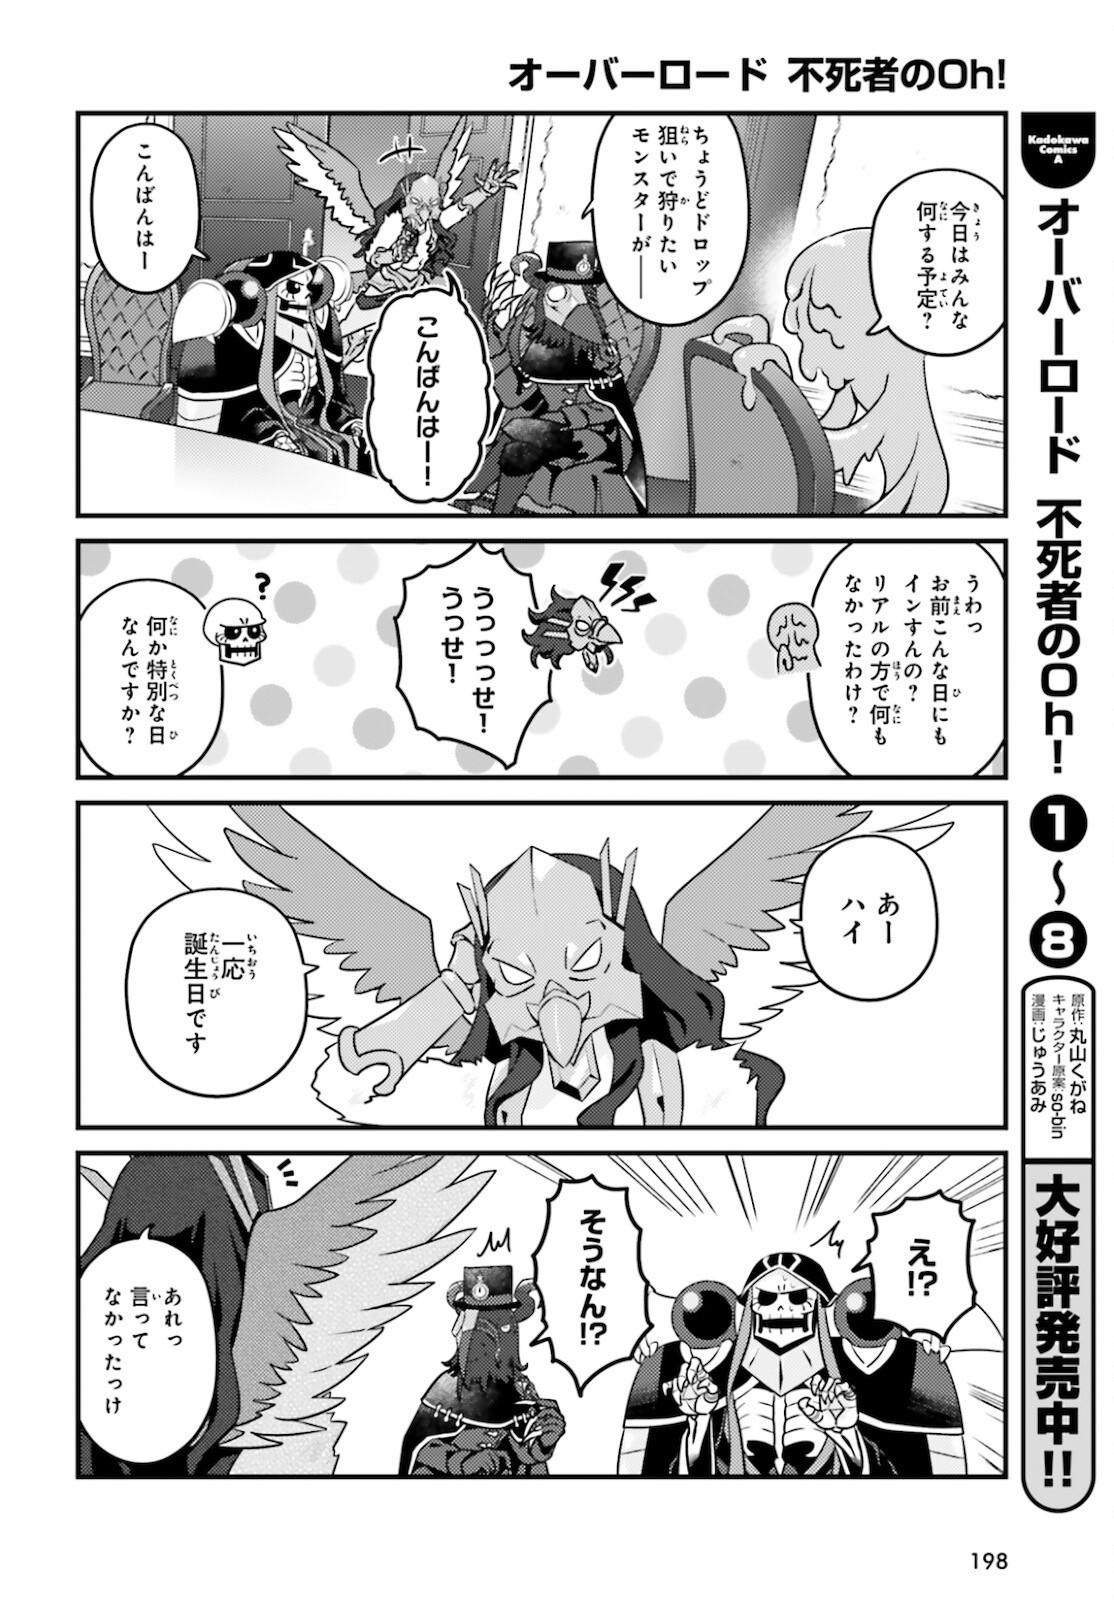 Overlord-Fushisha-no-Oh - Chapter 51 - Page 2